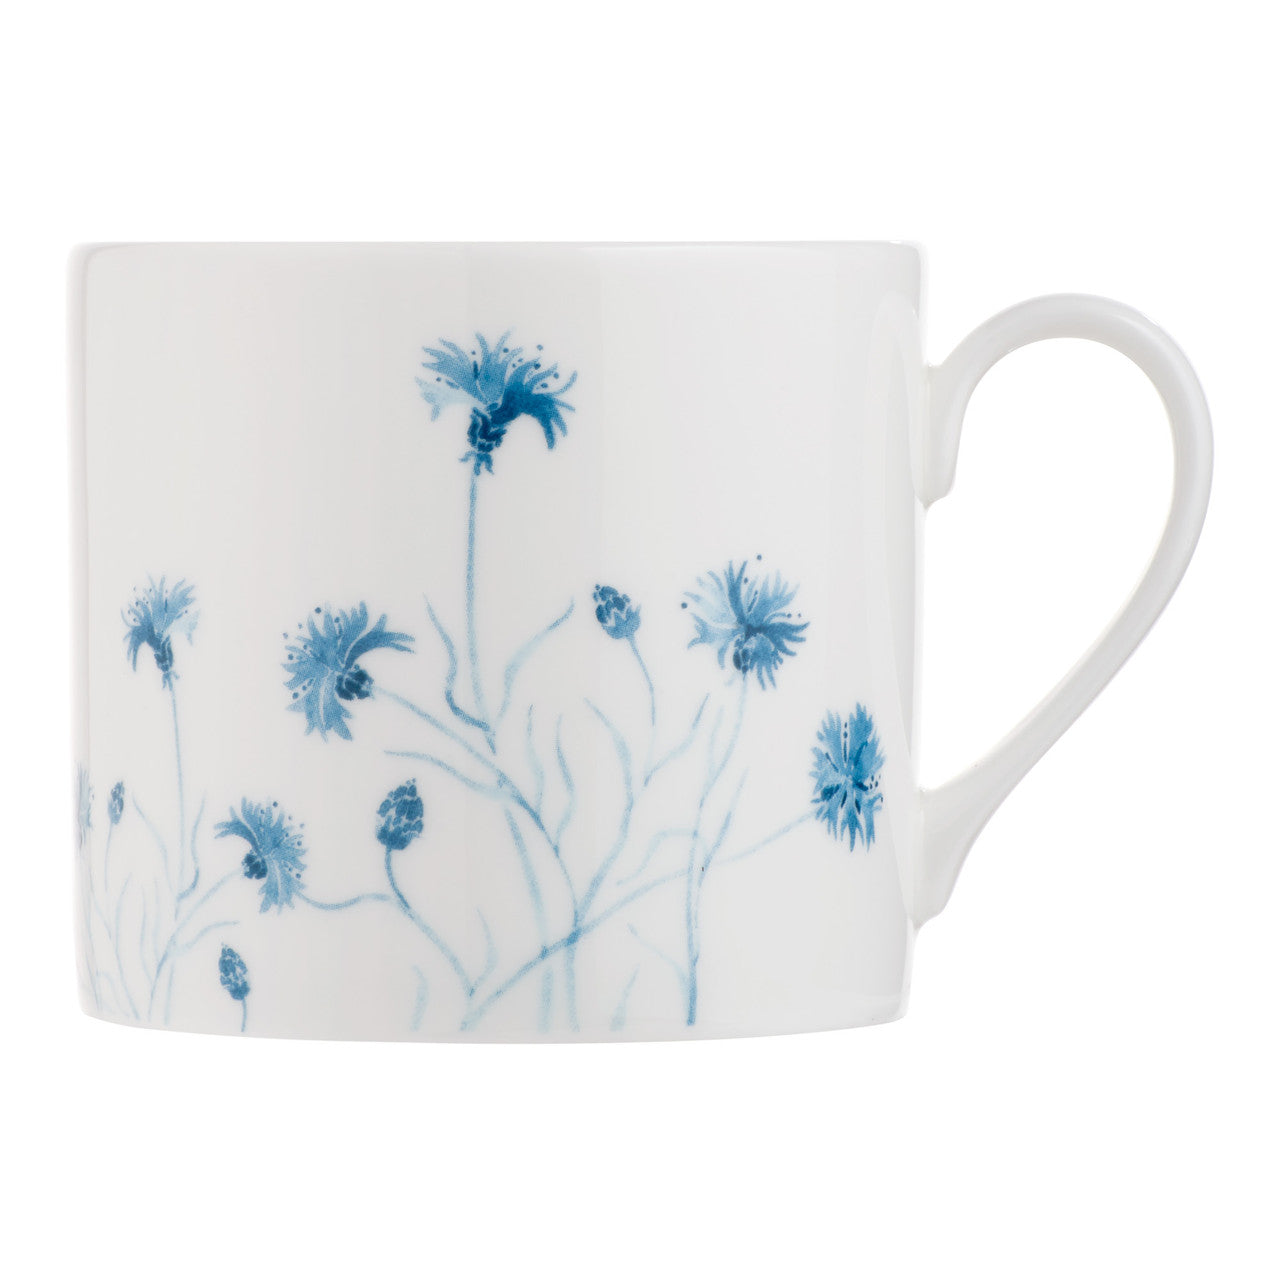 Cornflower Fields Small Mug by Jane Abbott Designs